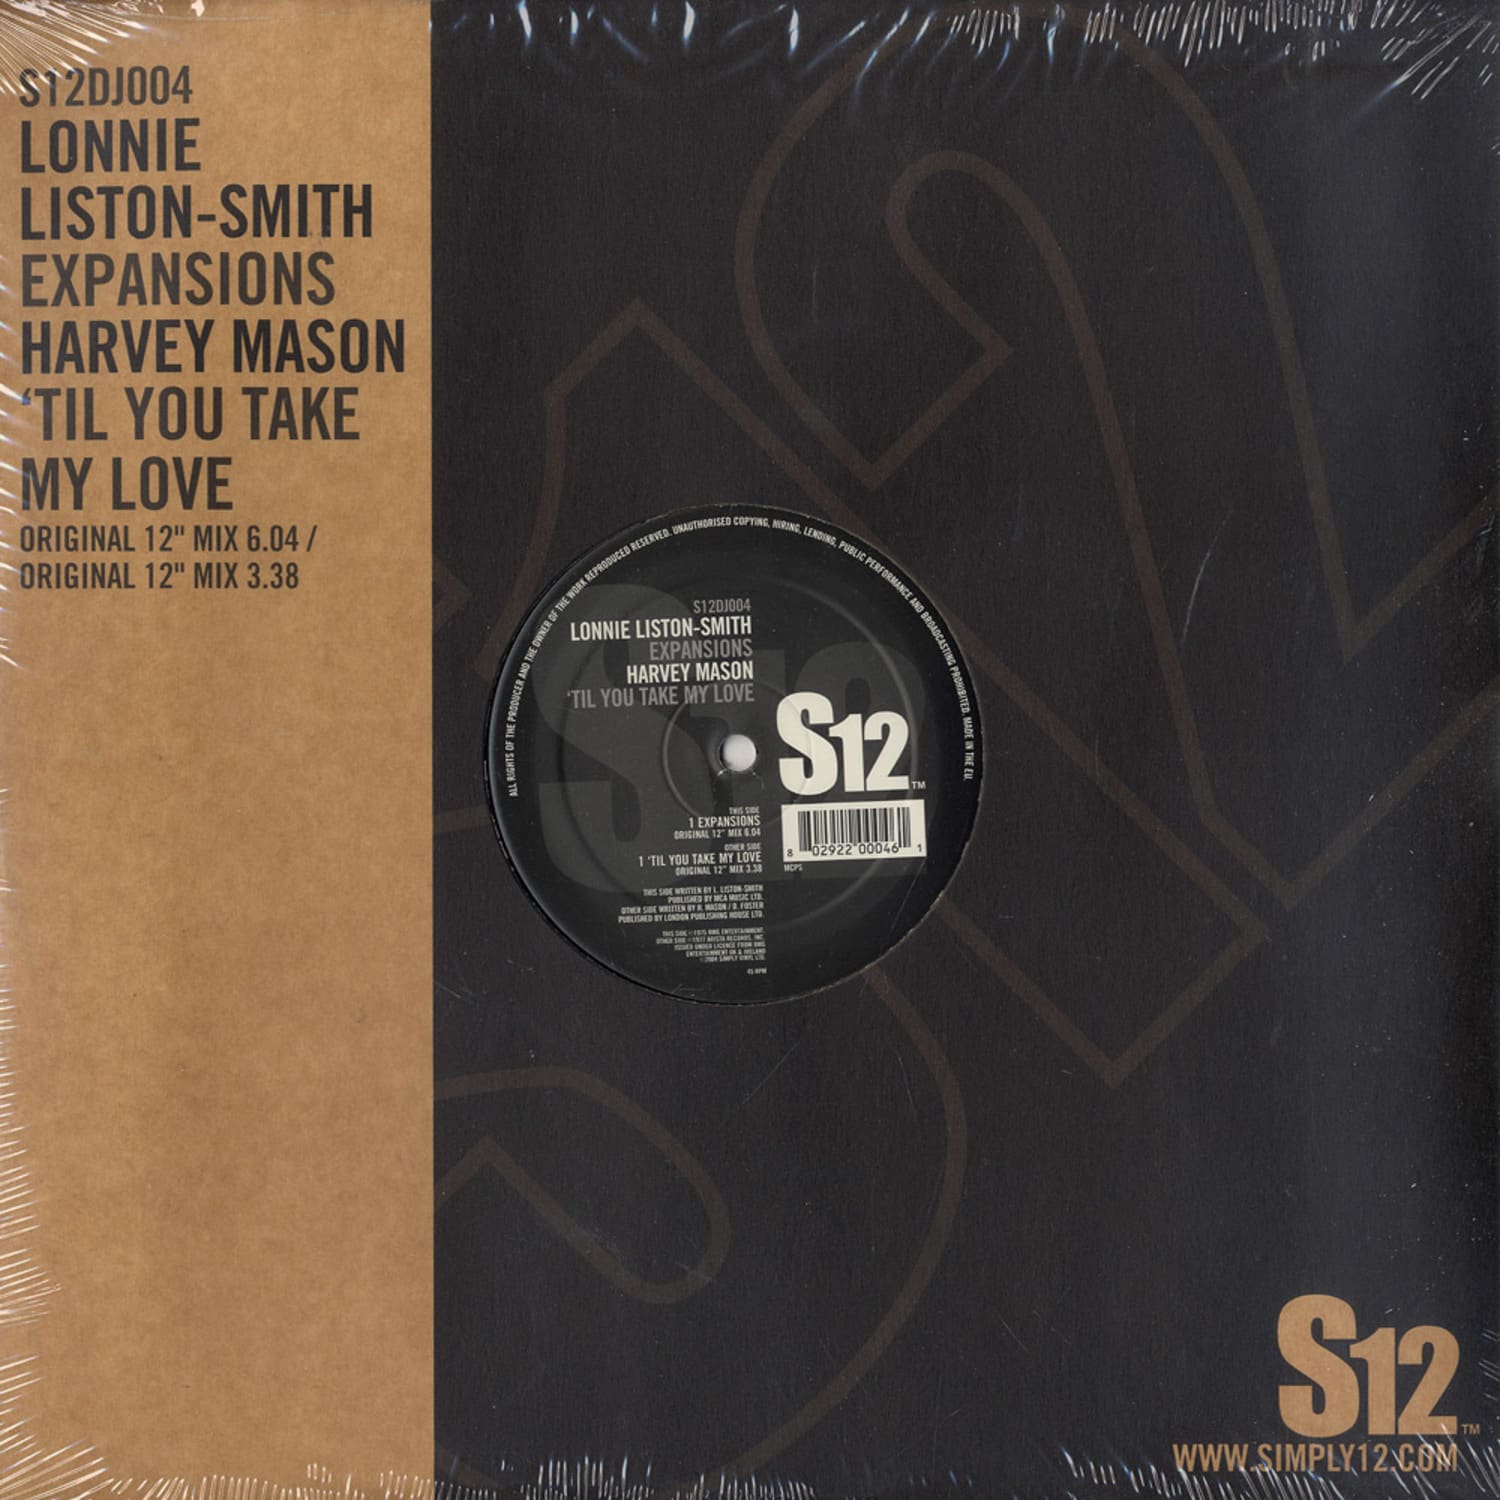 Lonnie Liston-Smith - EXPANSIONS - TIL YOU TAKE ME LOV